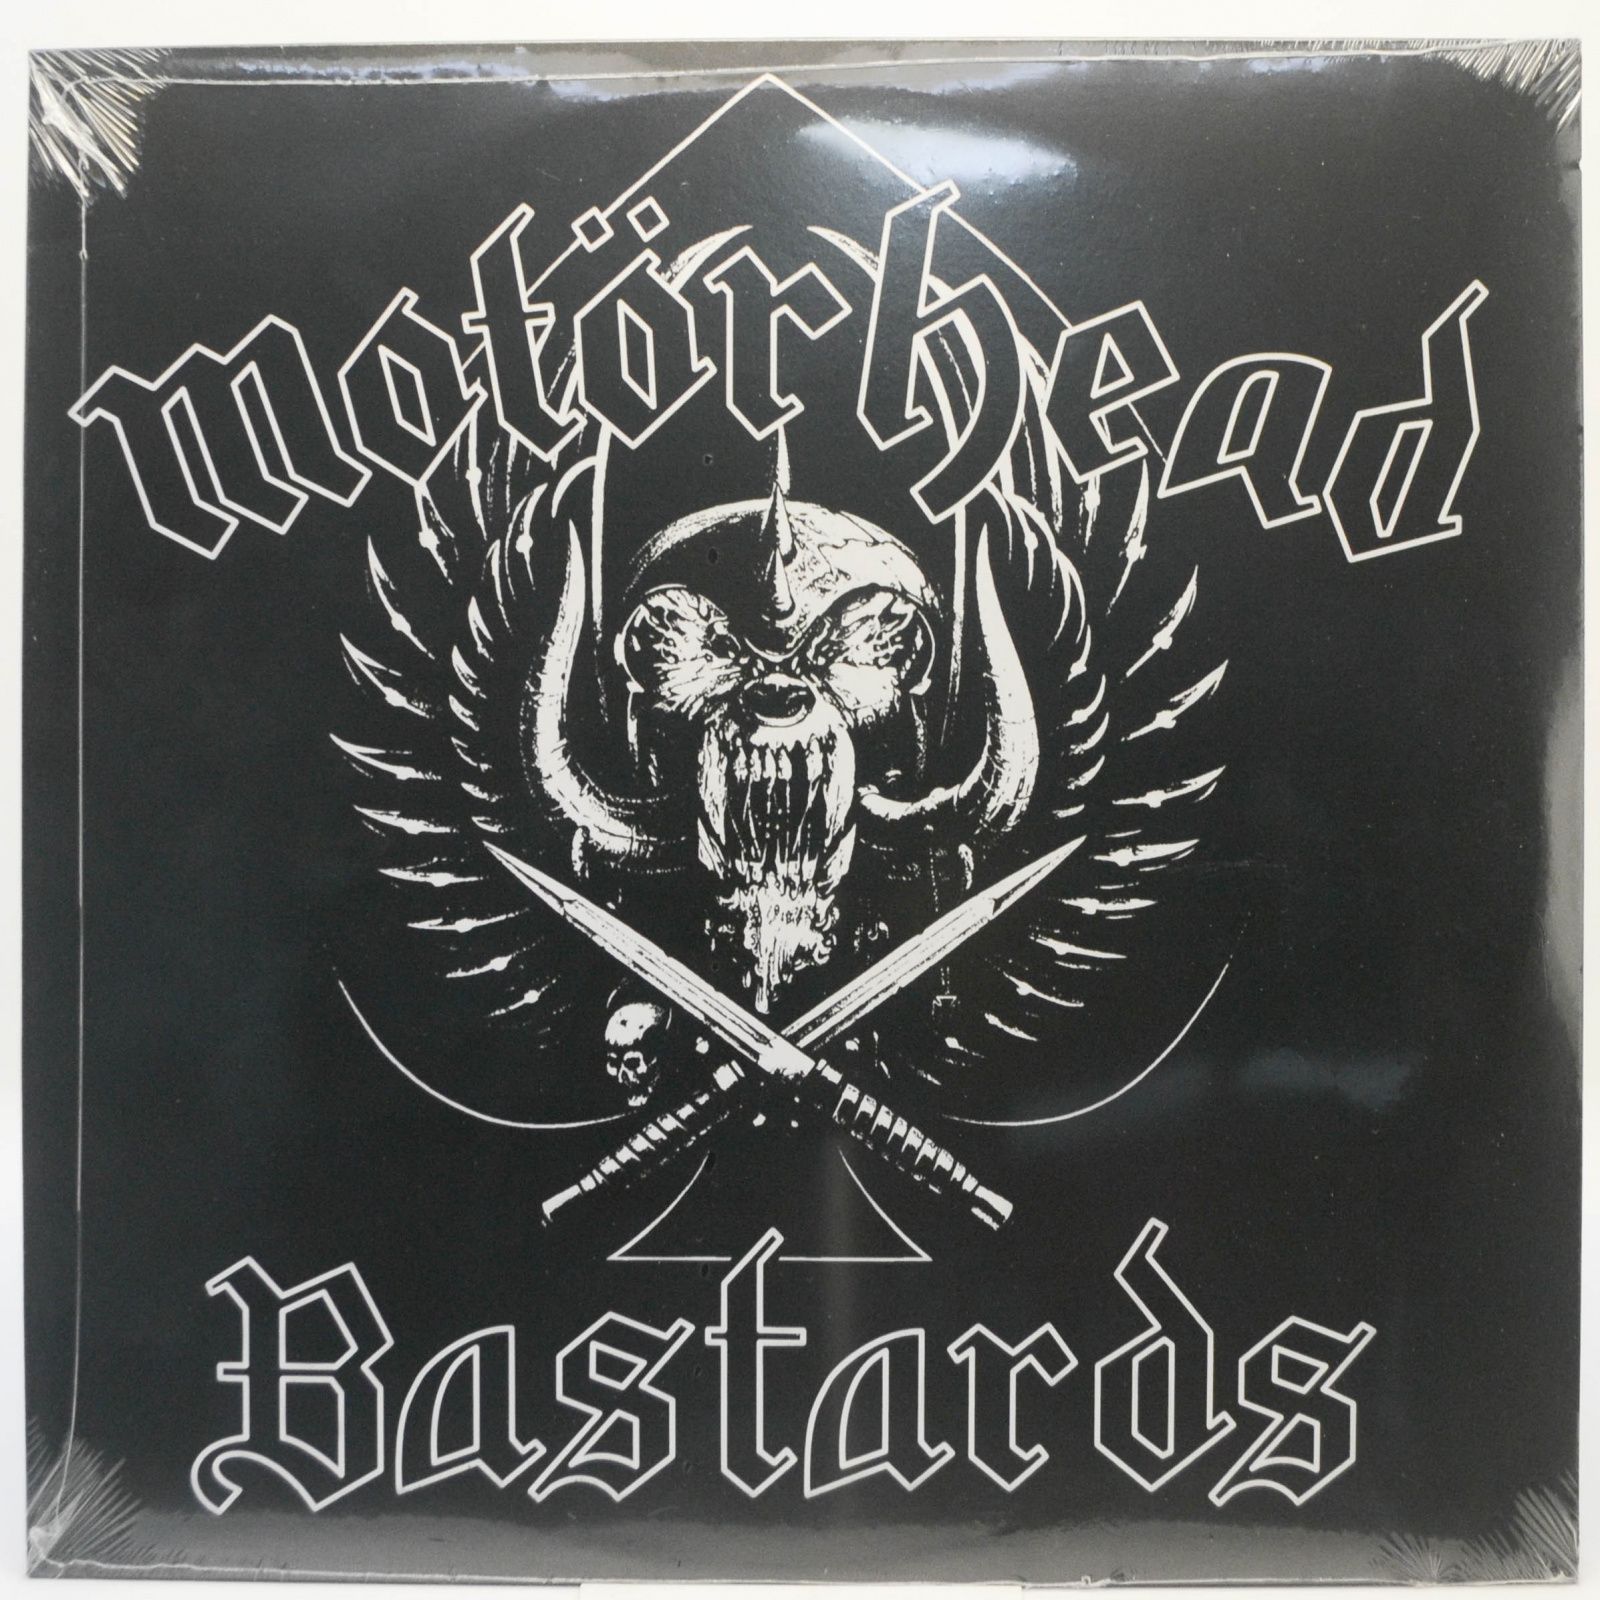 Motörhead — Bastards, 2013